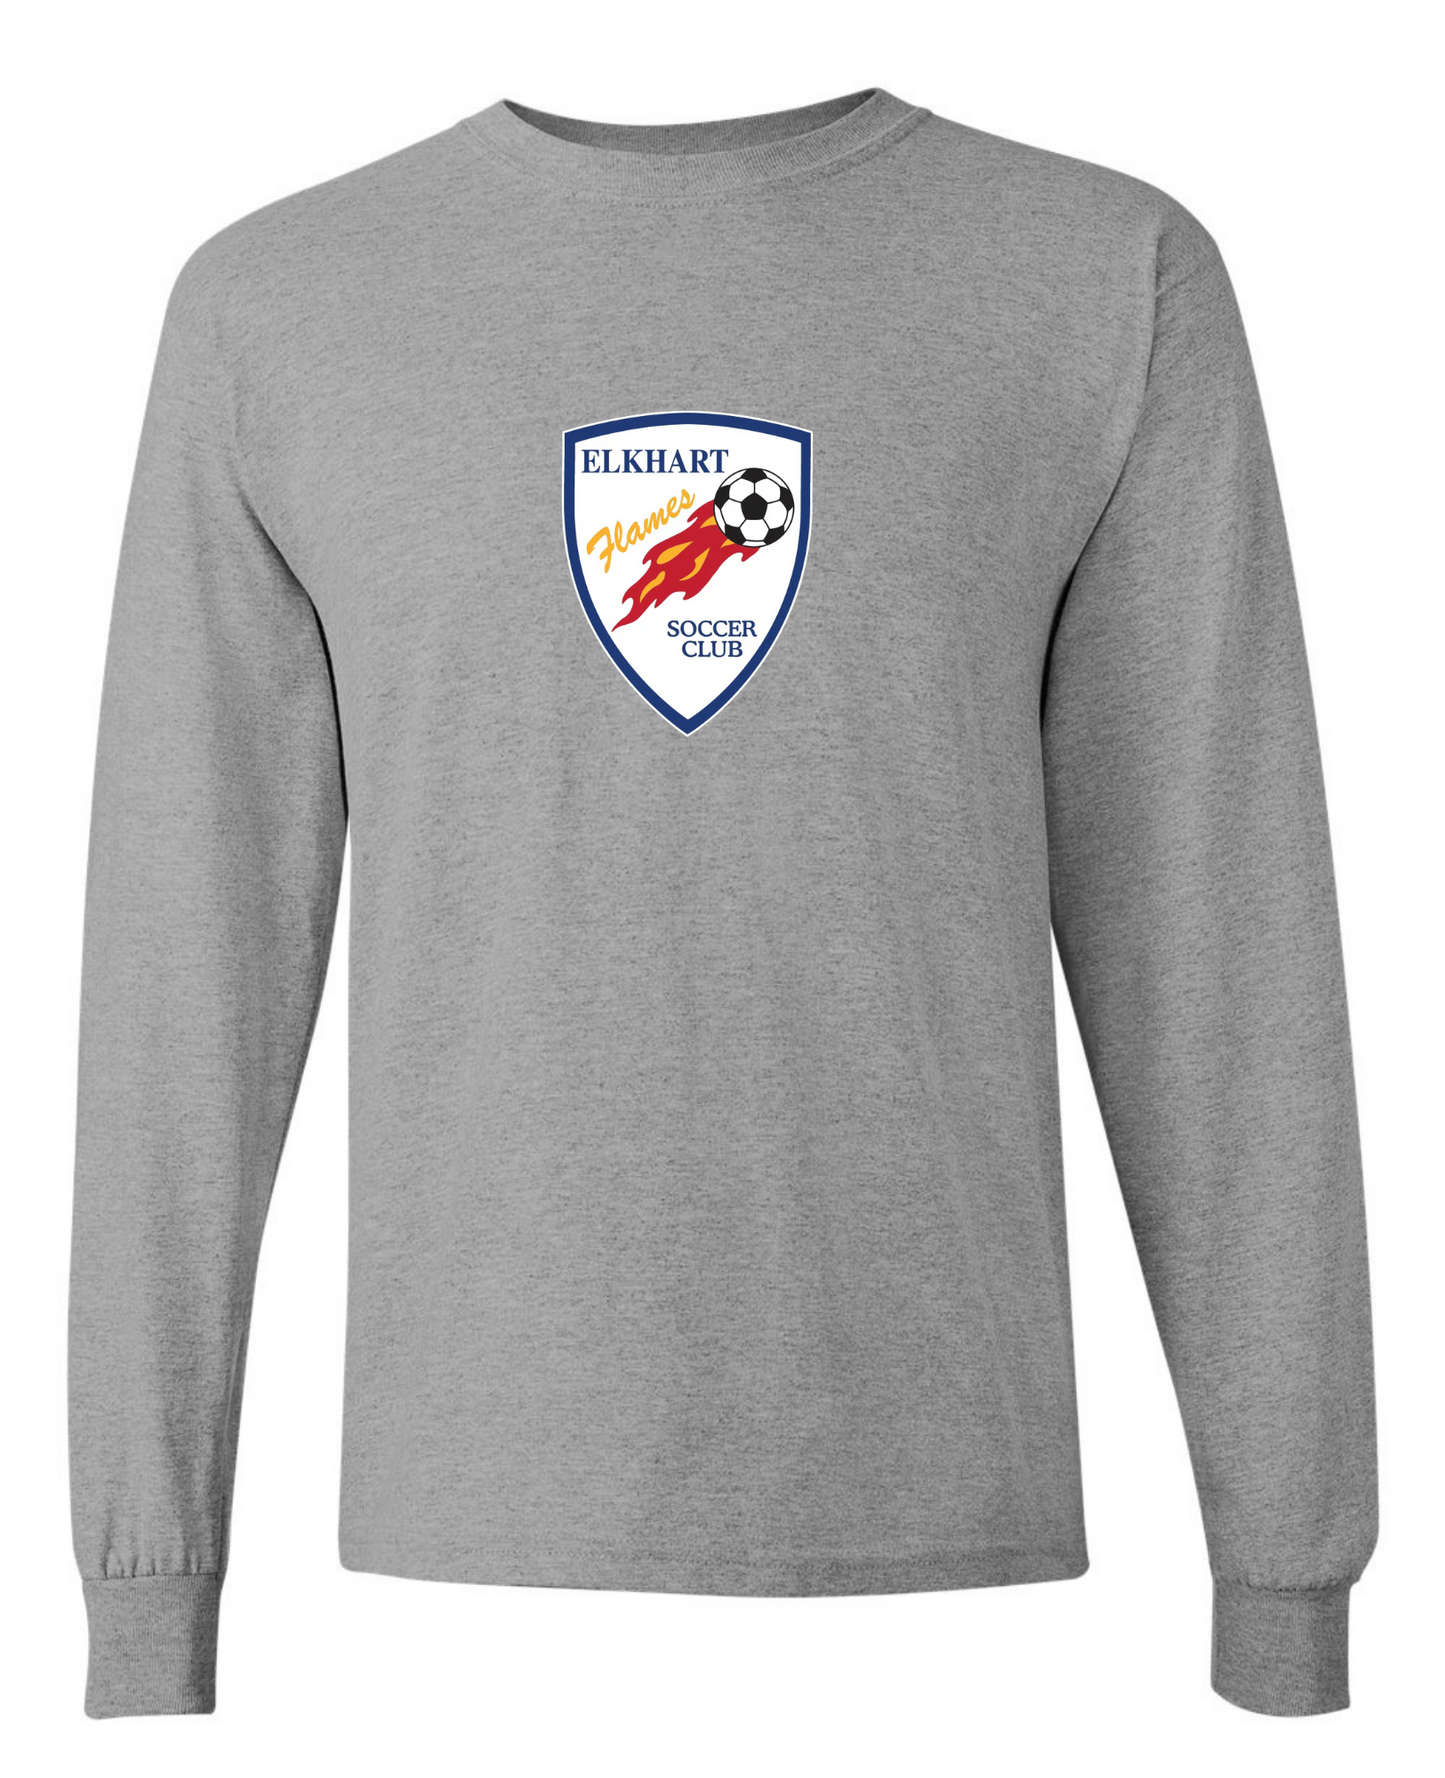 Elkhart Flames Soccer Club Logo Long Sleeve Tee - Adult